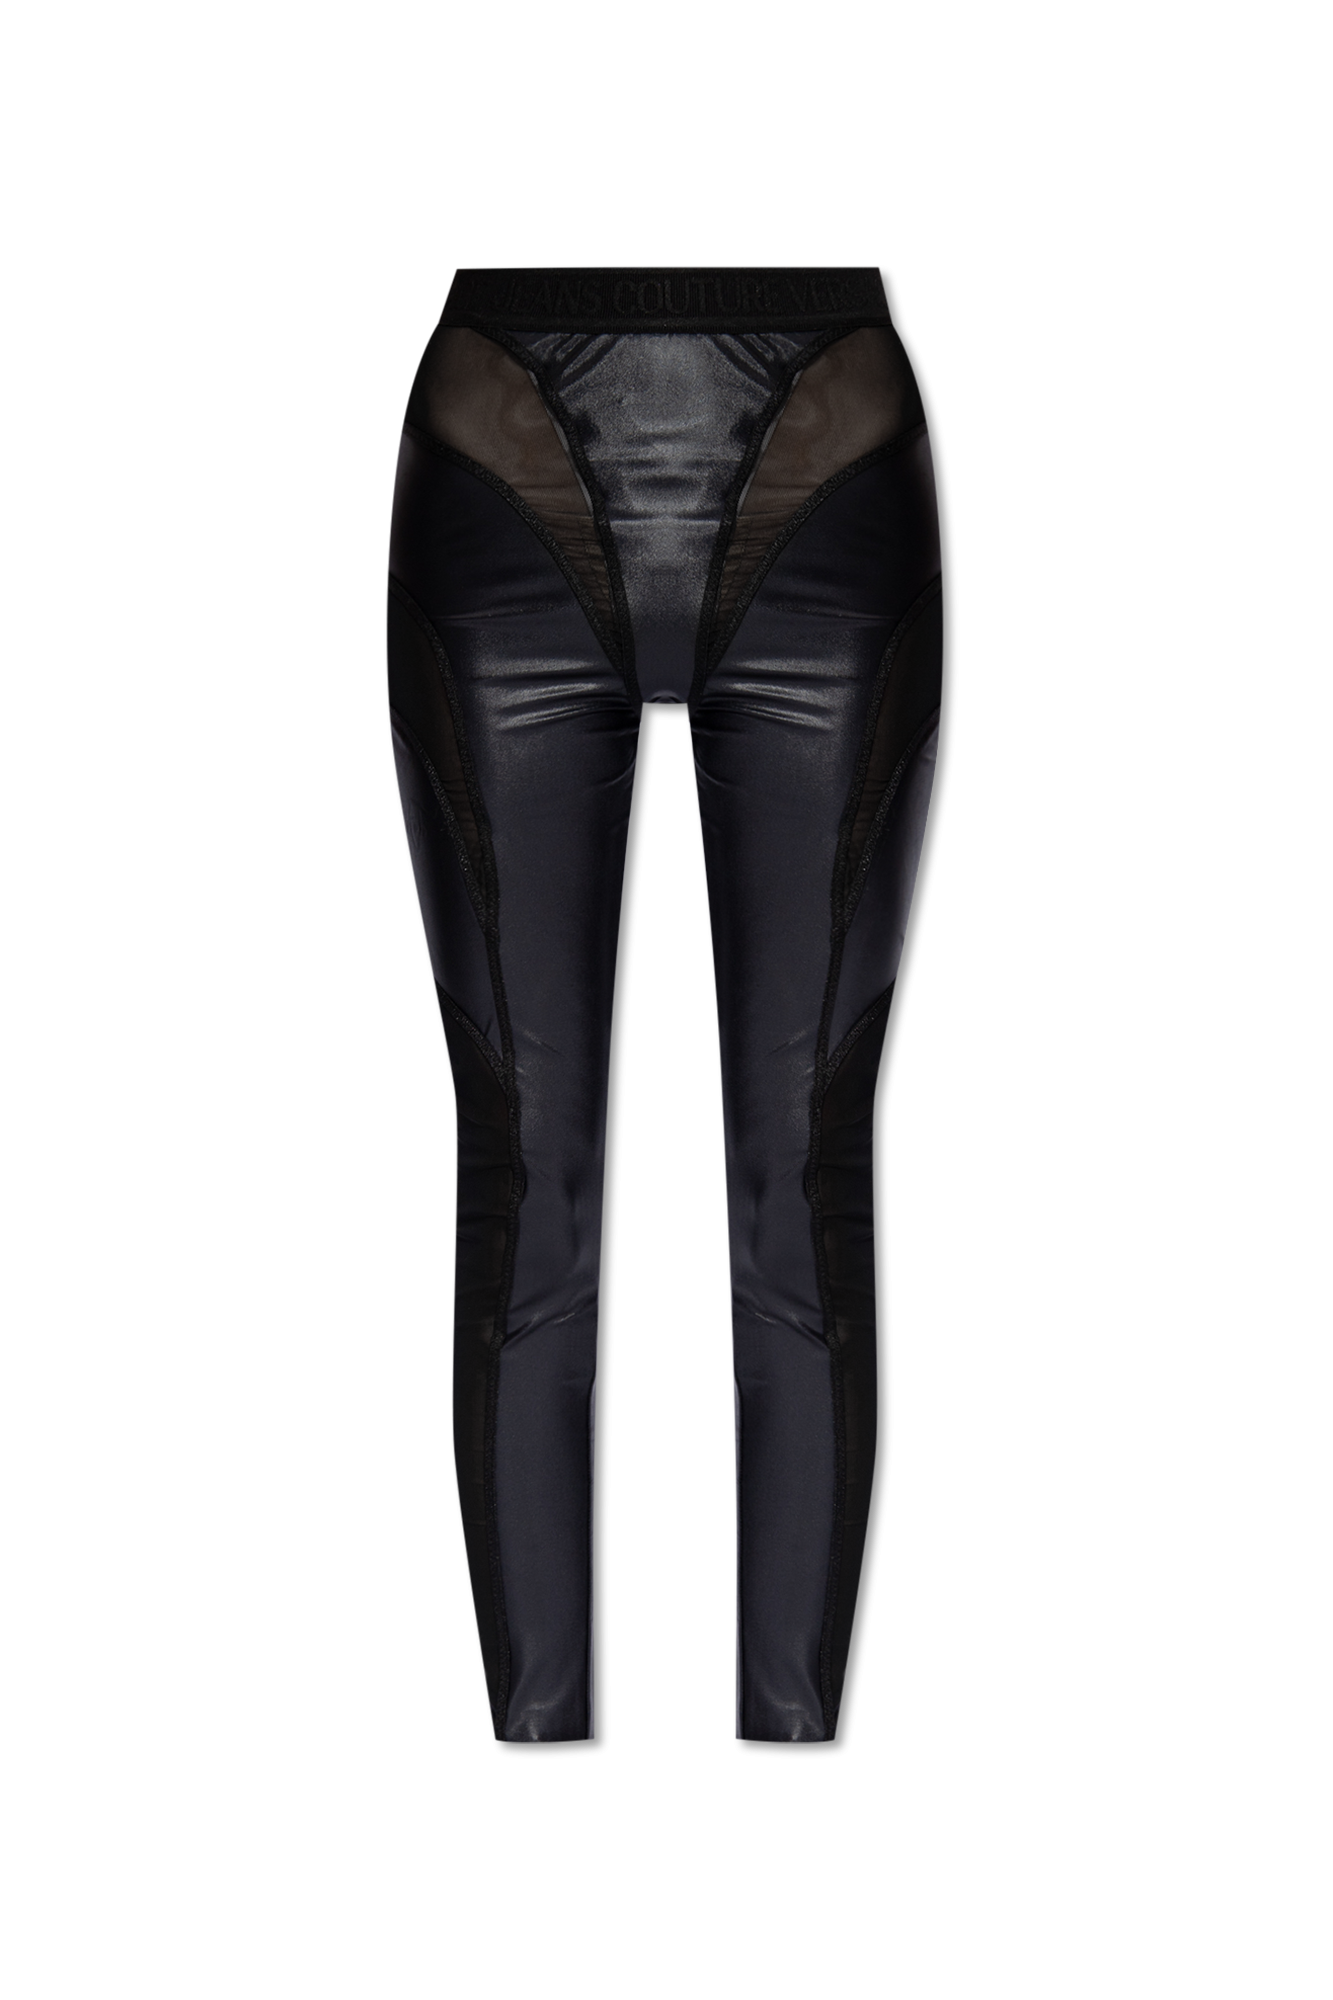 Black Patterned leggings Versace Jeans Couture - Vitkac Canada